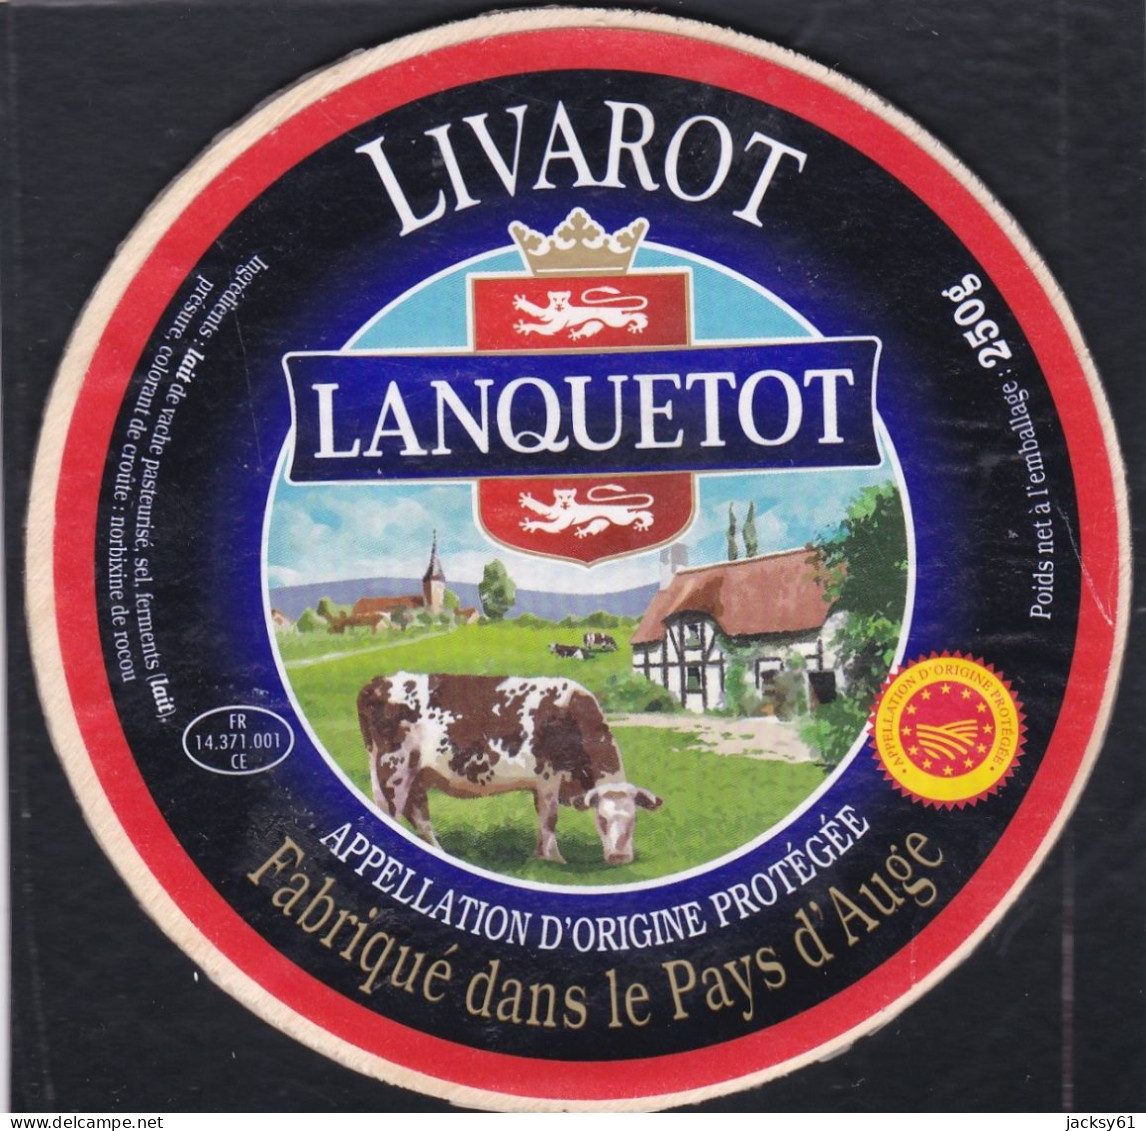 14 - Livarot - Lanquetot - Fromage